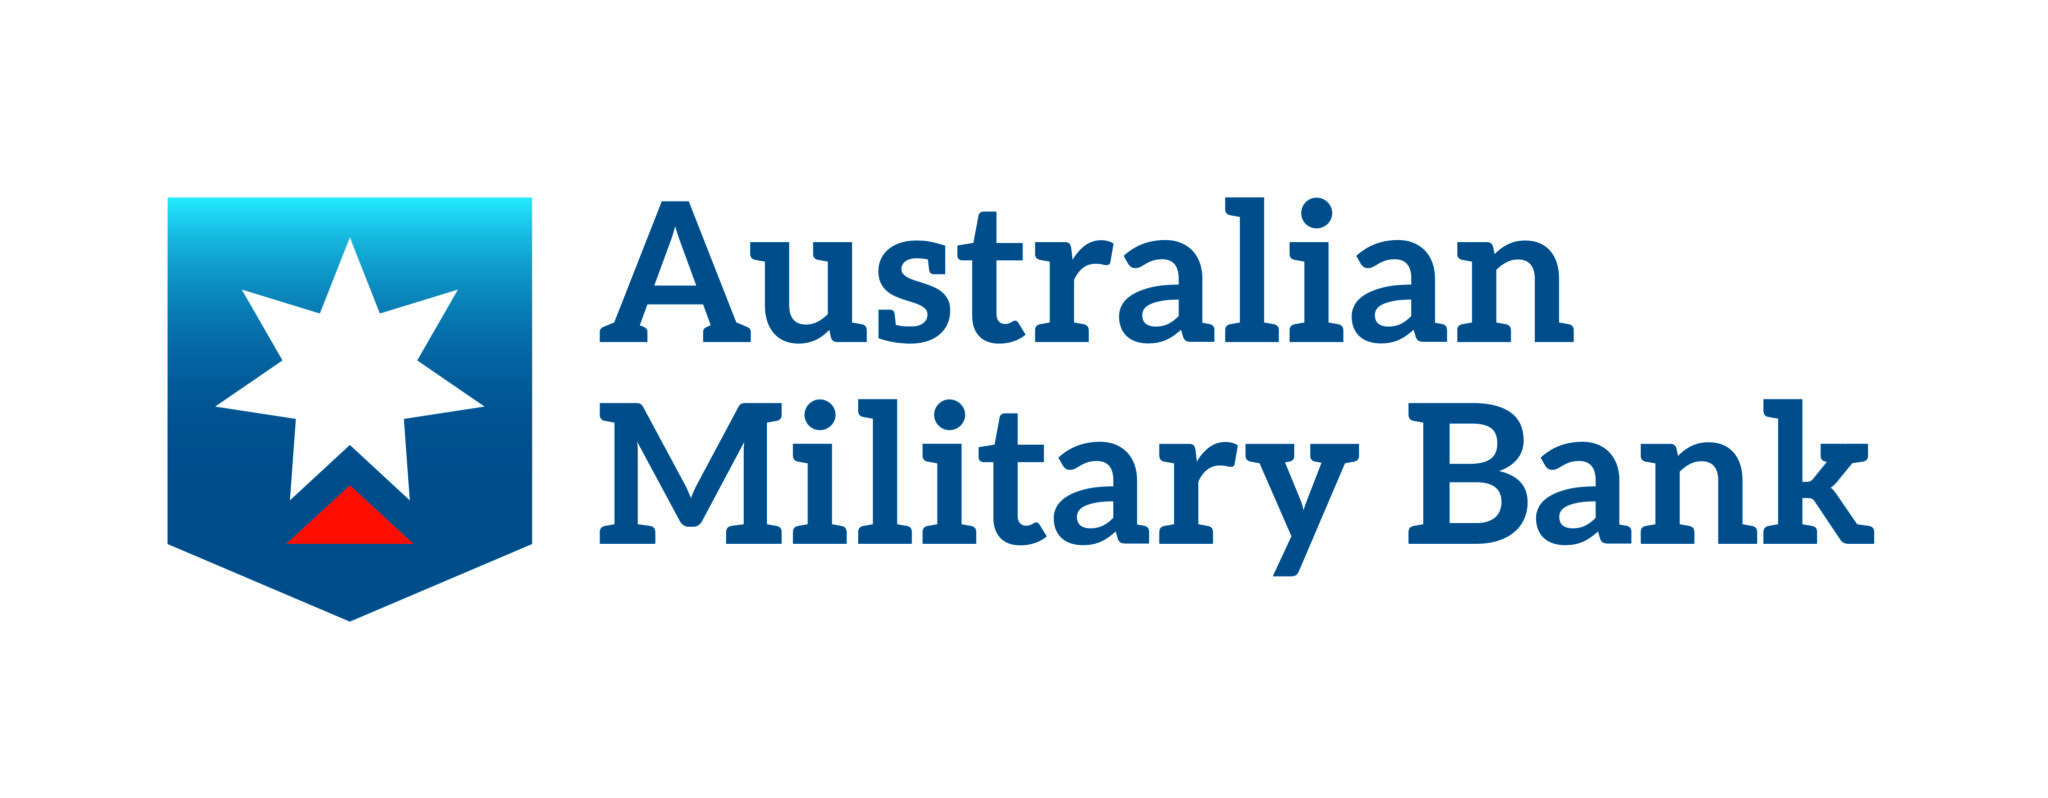 7149_Australian_Military_Bank_Logo_CMYK_MASTER